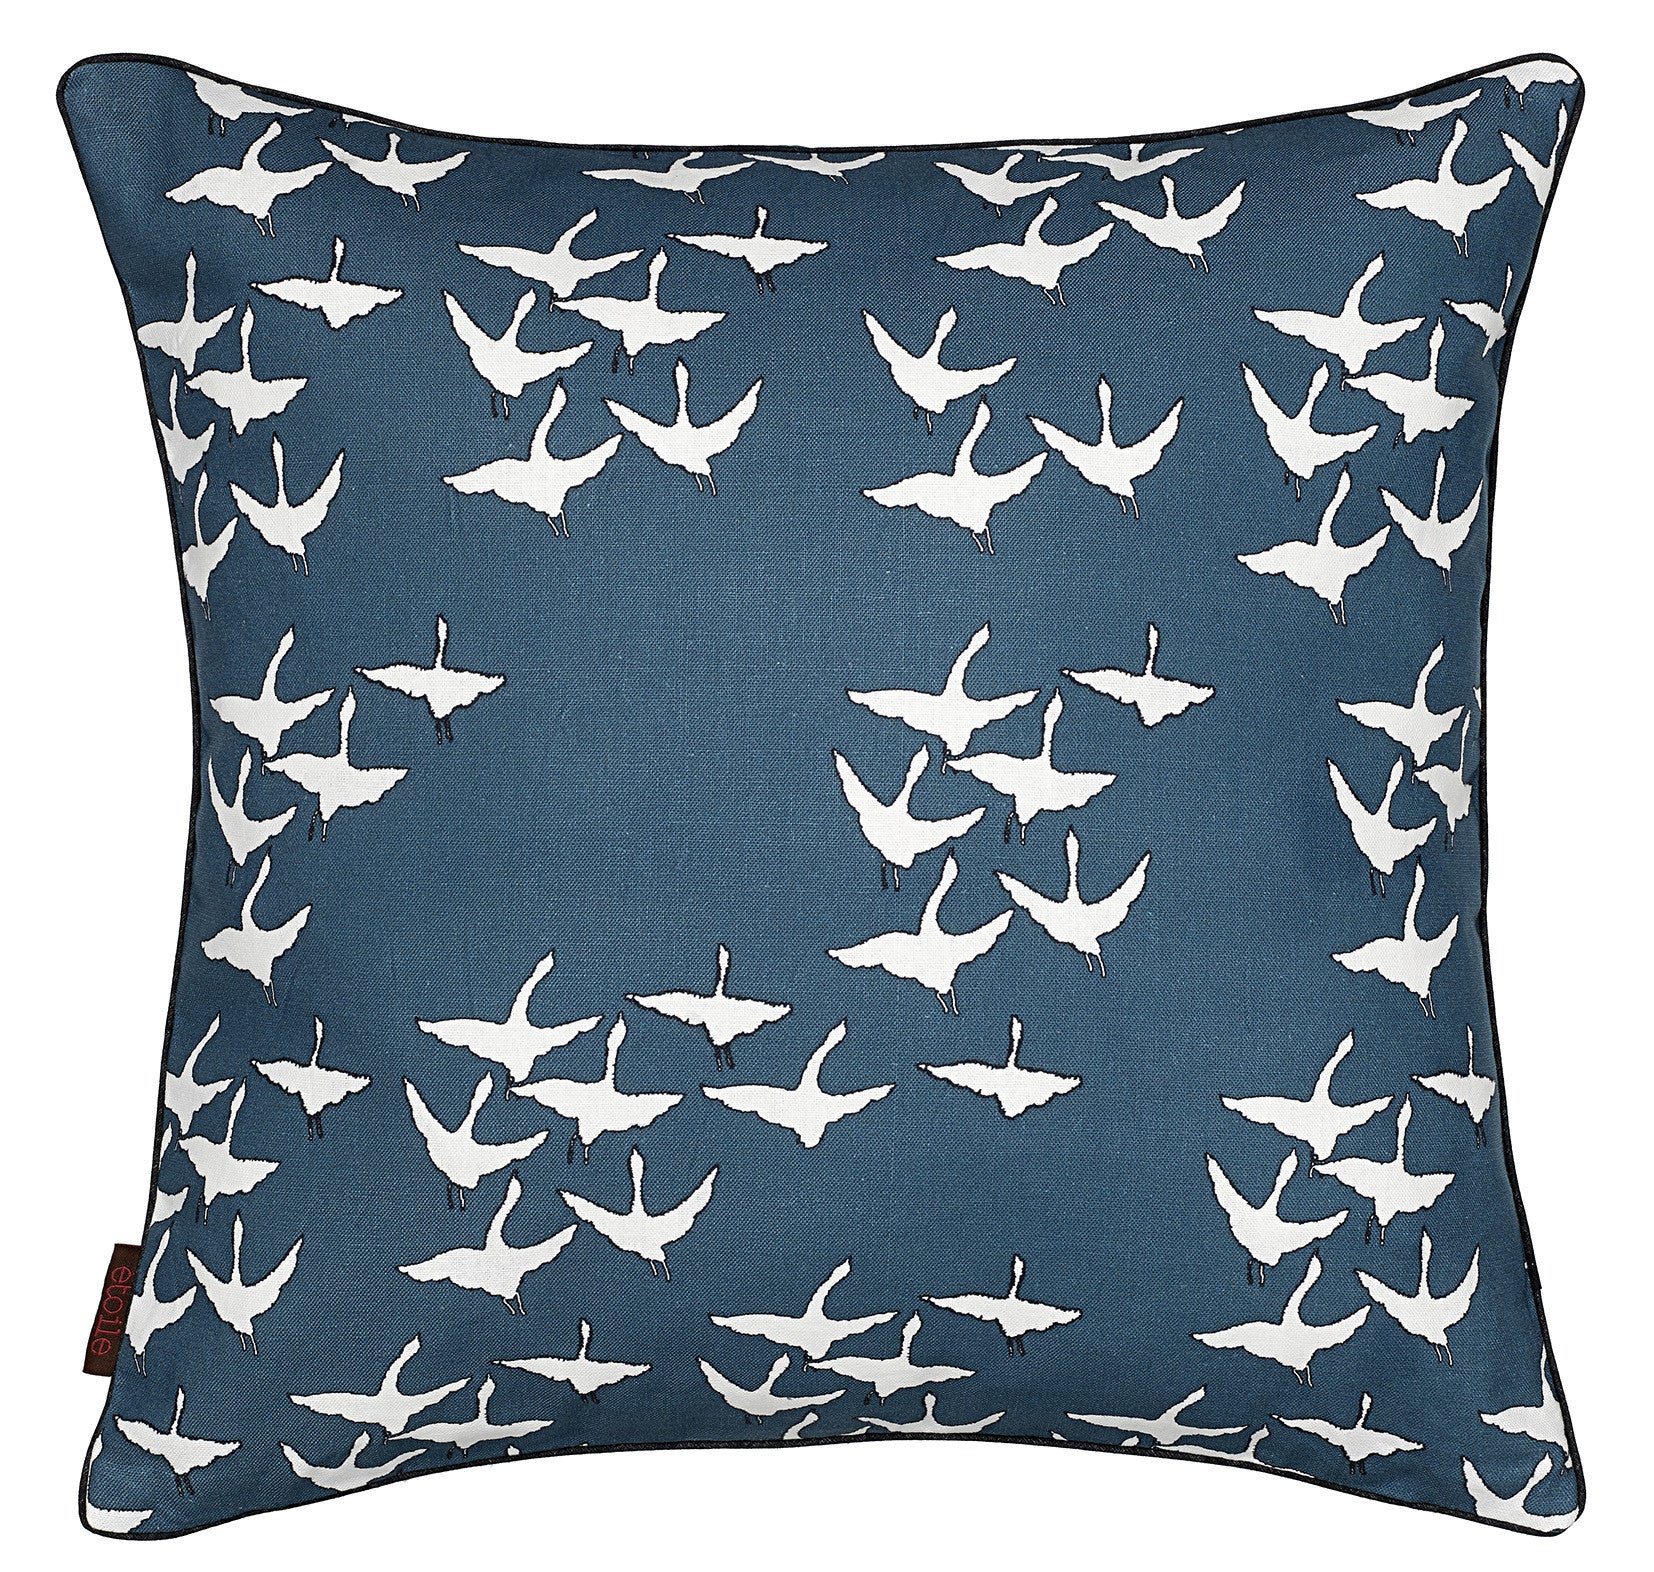 Geese Pattern Cotton Linen Cushion in Dark Petrol Blue 45x45cm